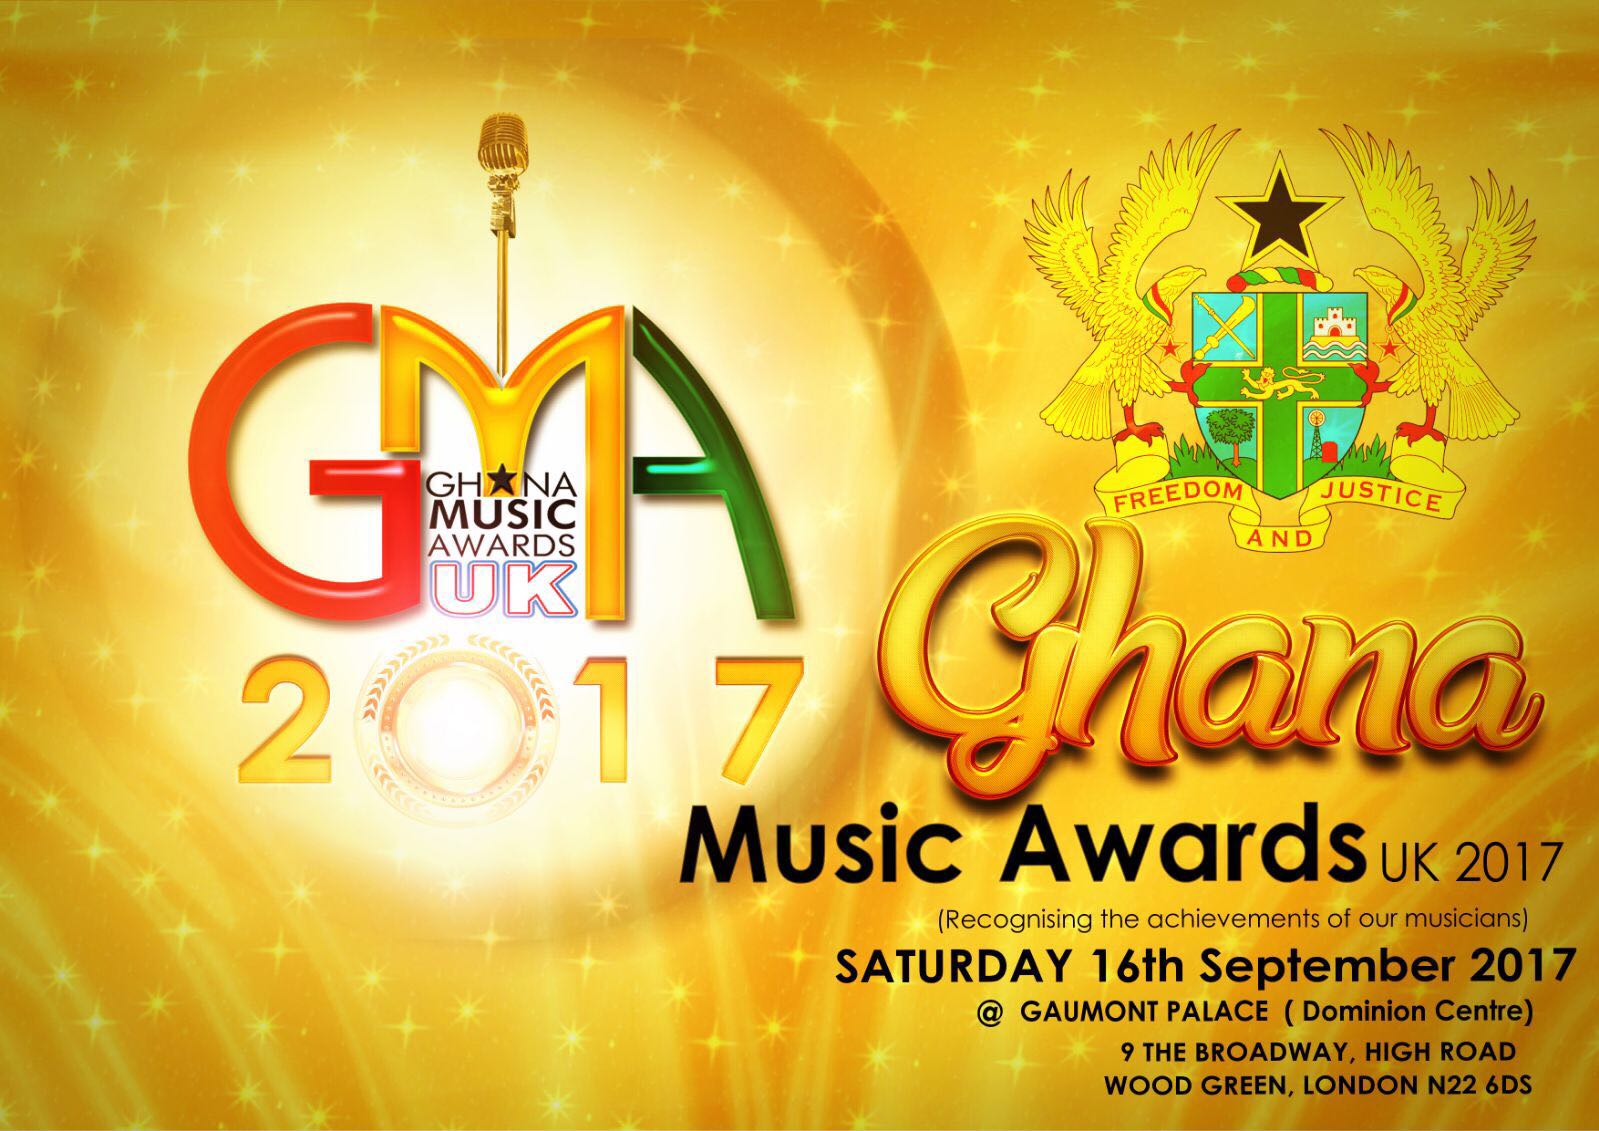 Ghana Music Awards UK 2017: Nominations announced